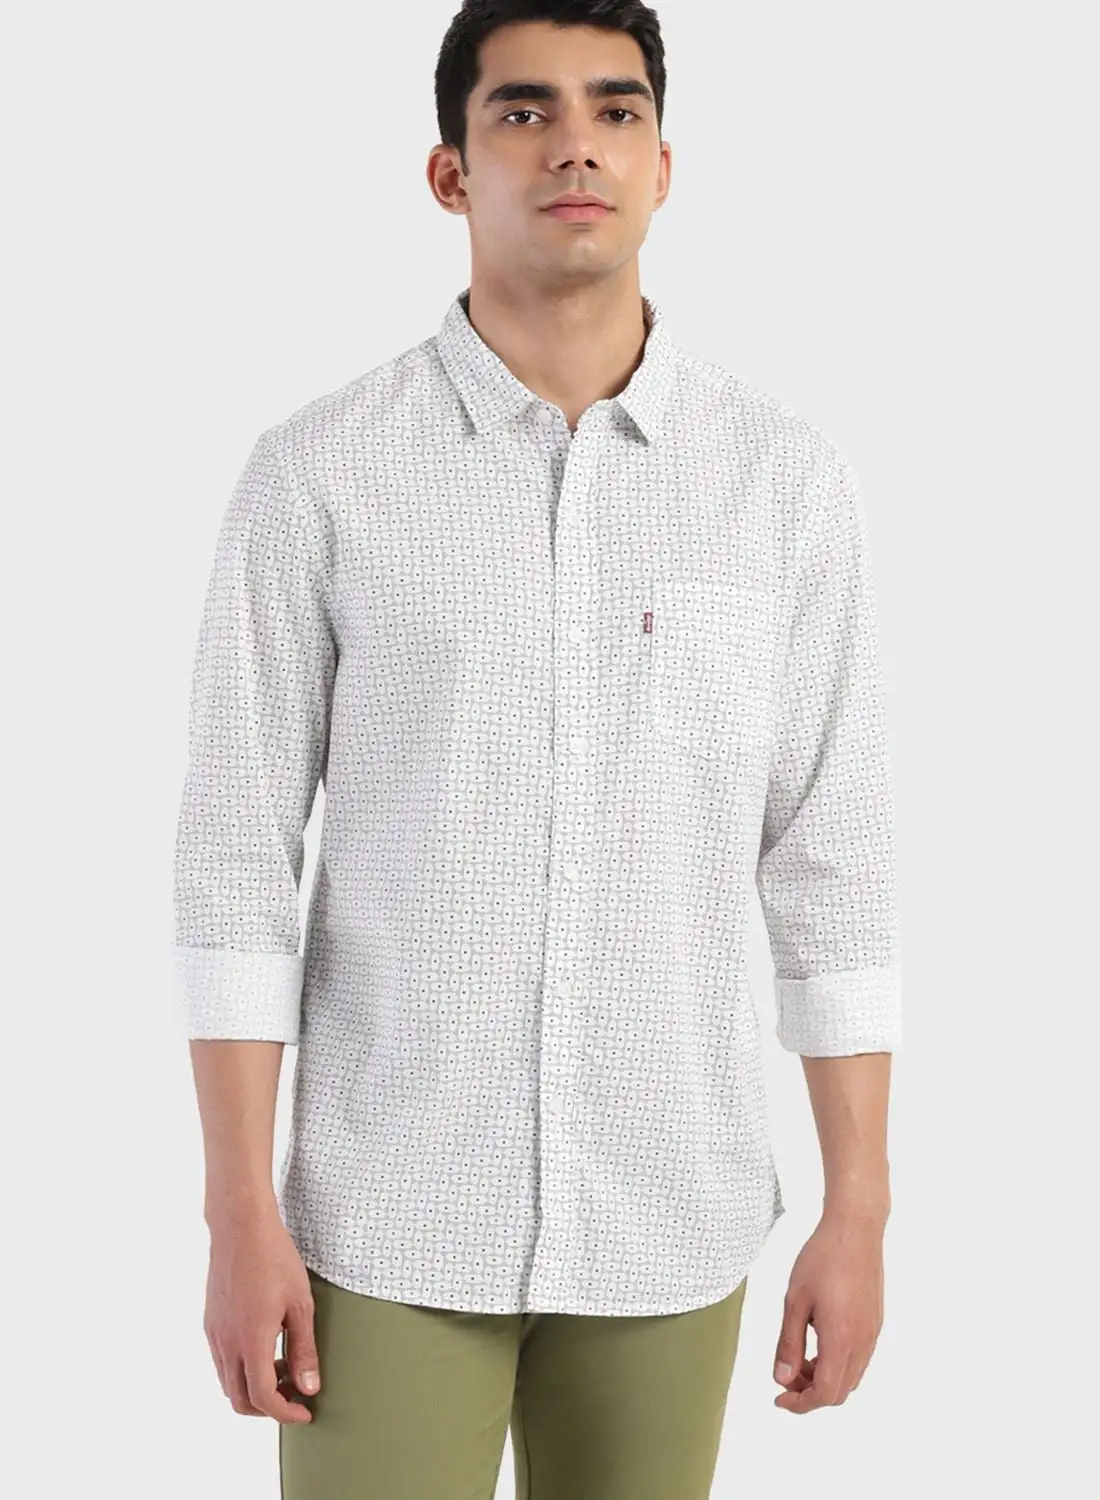 قميص Levi's ذو طباعة هندسية مقاس عادي